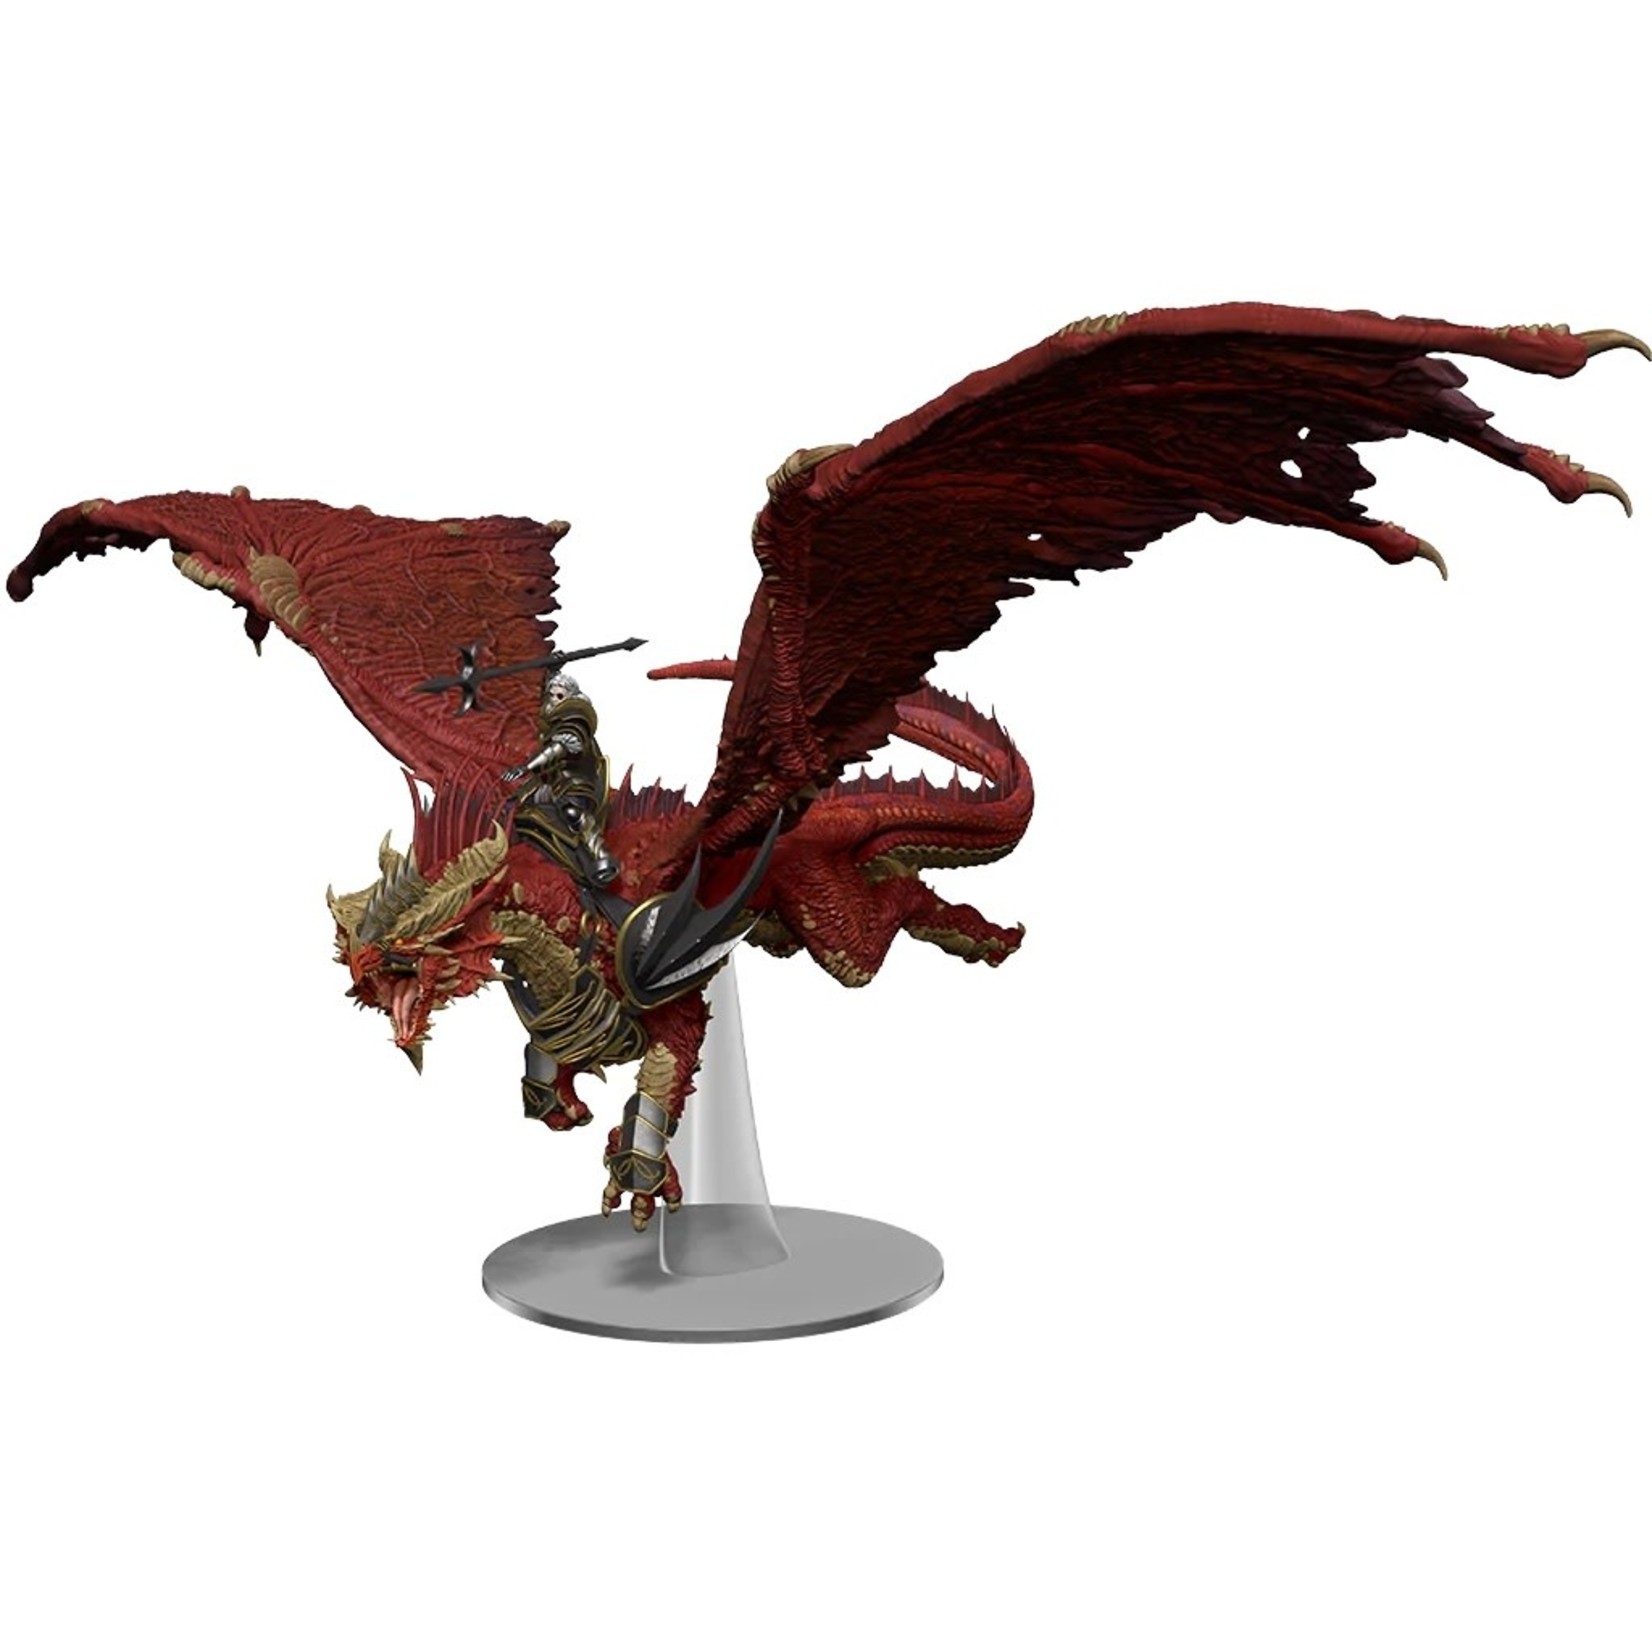 WIZKIDS/NECA Dungeons and Dragons Dragonlance Kensaldi on Red Dragon